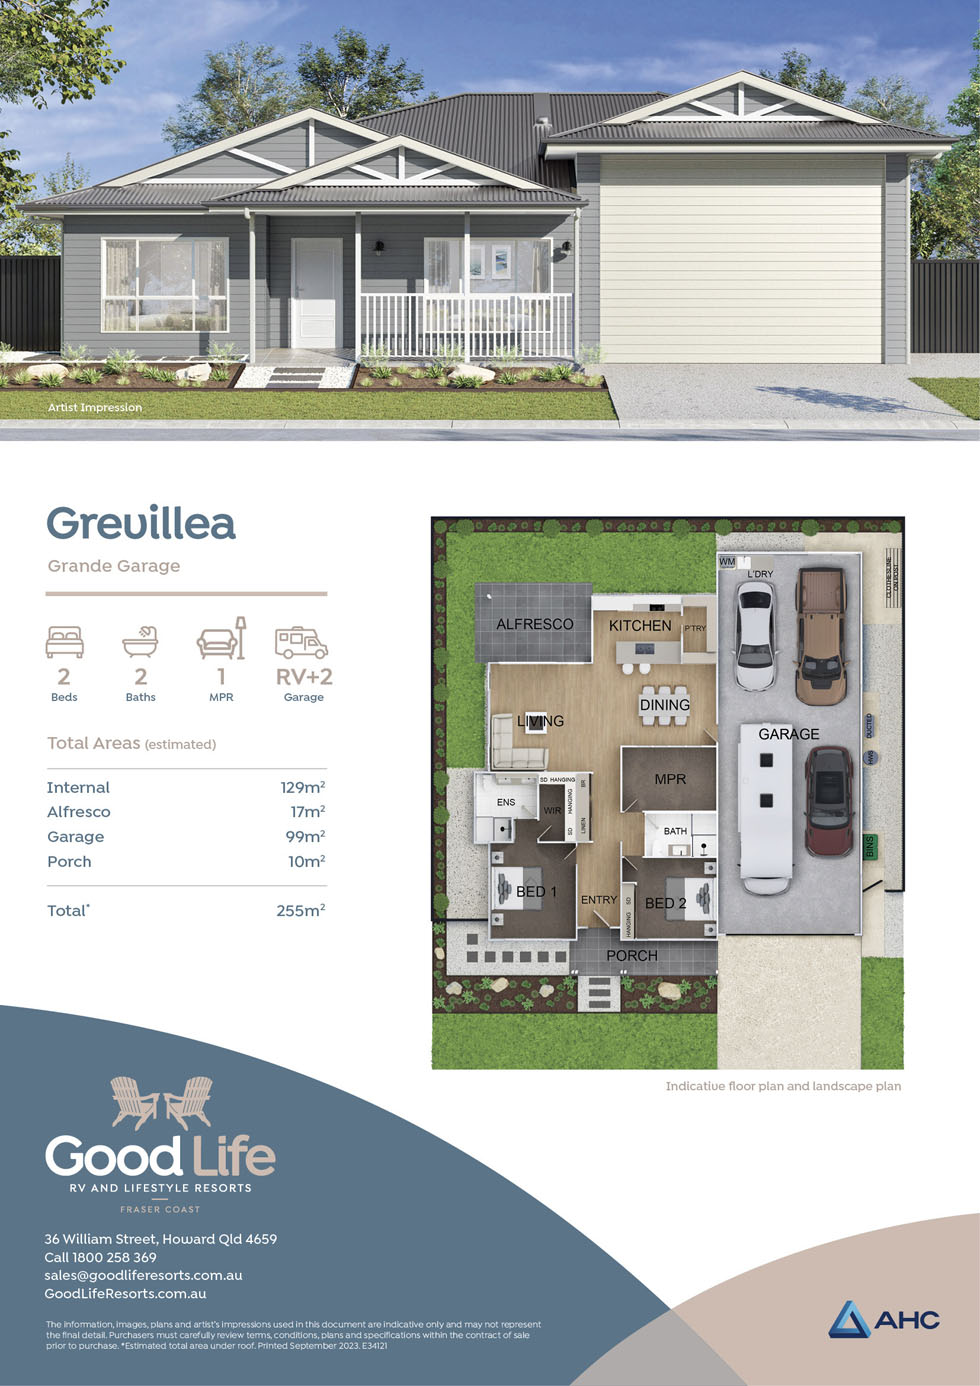 Home Design: Grevillea Grande Garage